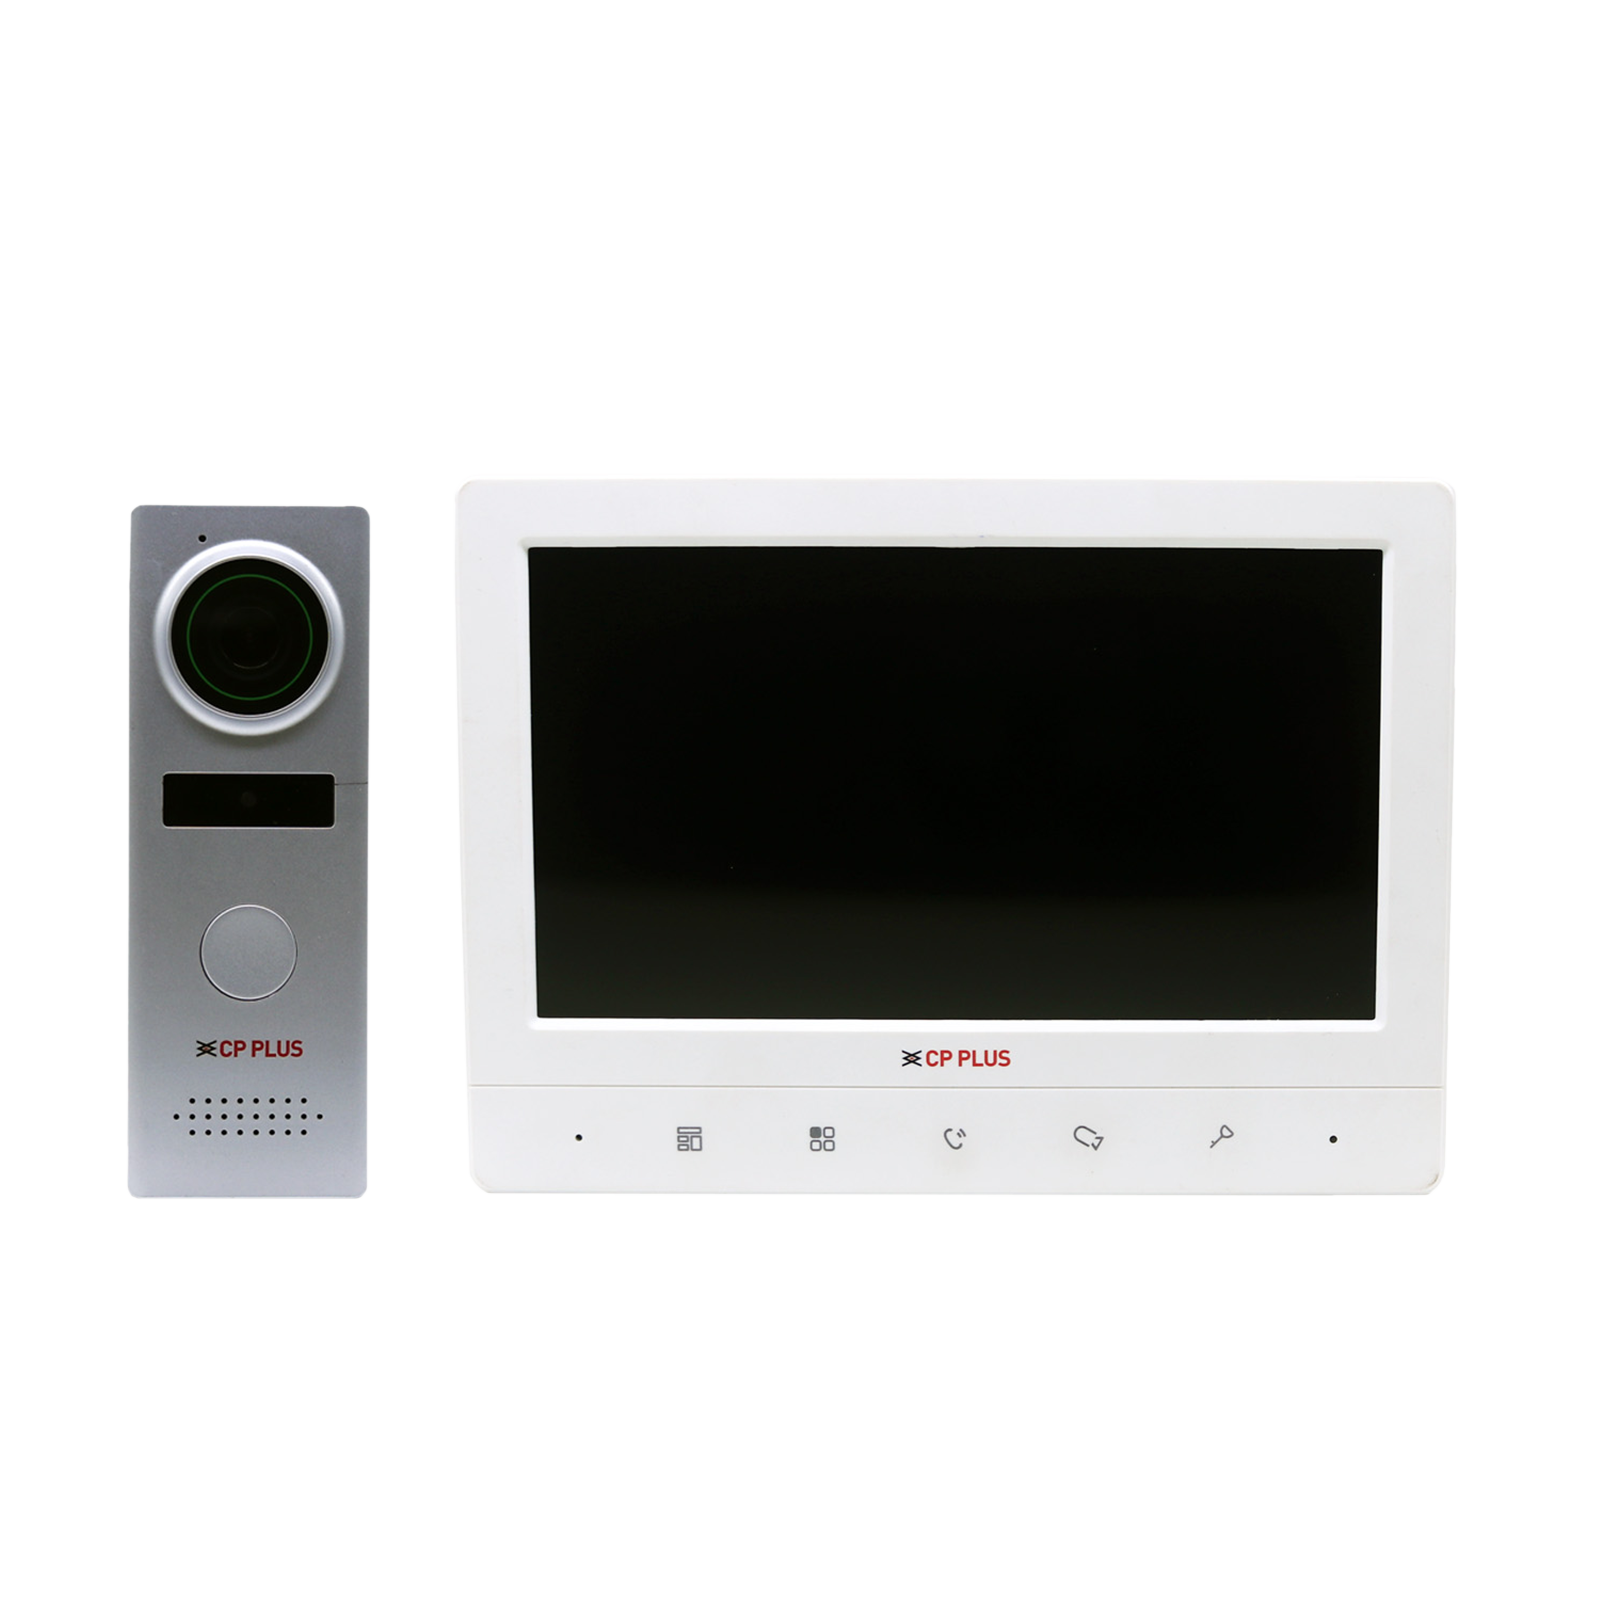 CP PLUS 7 inch Video Intercom Kit (Multiple Bell Sounds, CP-UVK-701MTA, White)